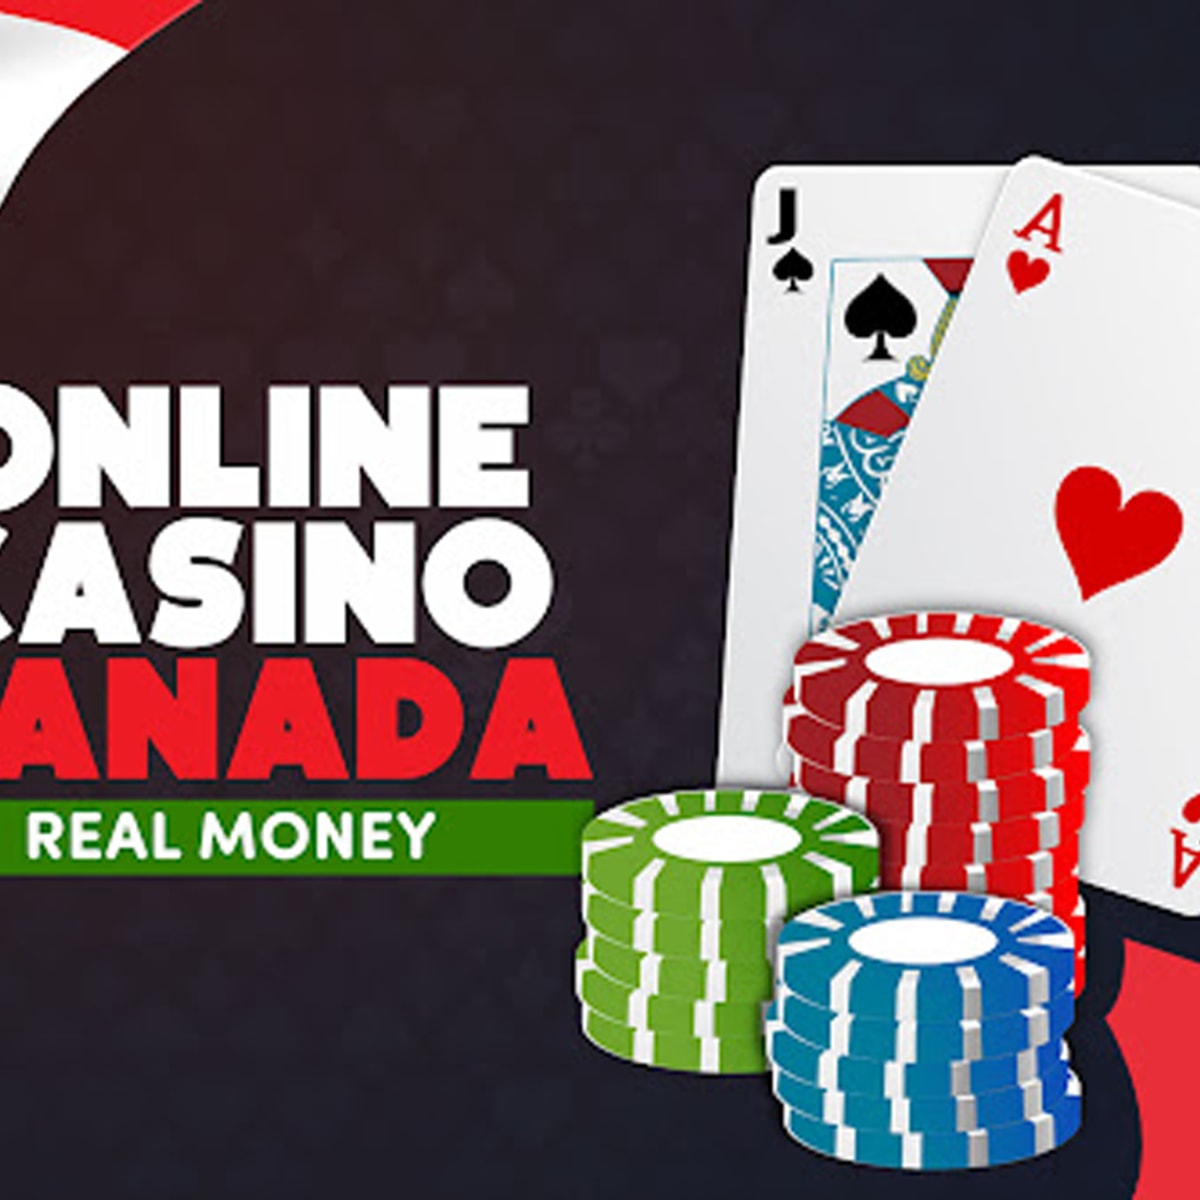 Want More Money? Start casino online